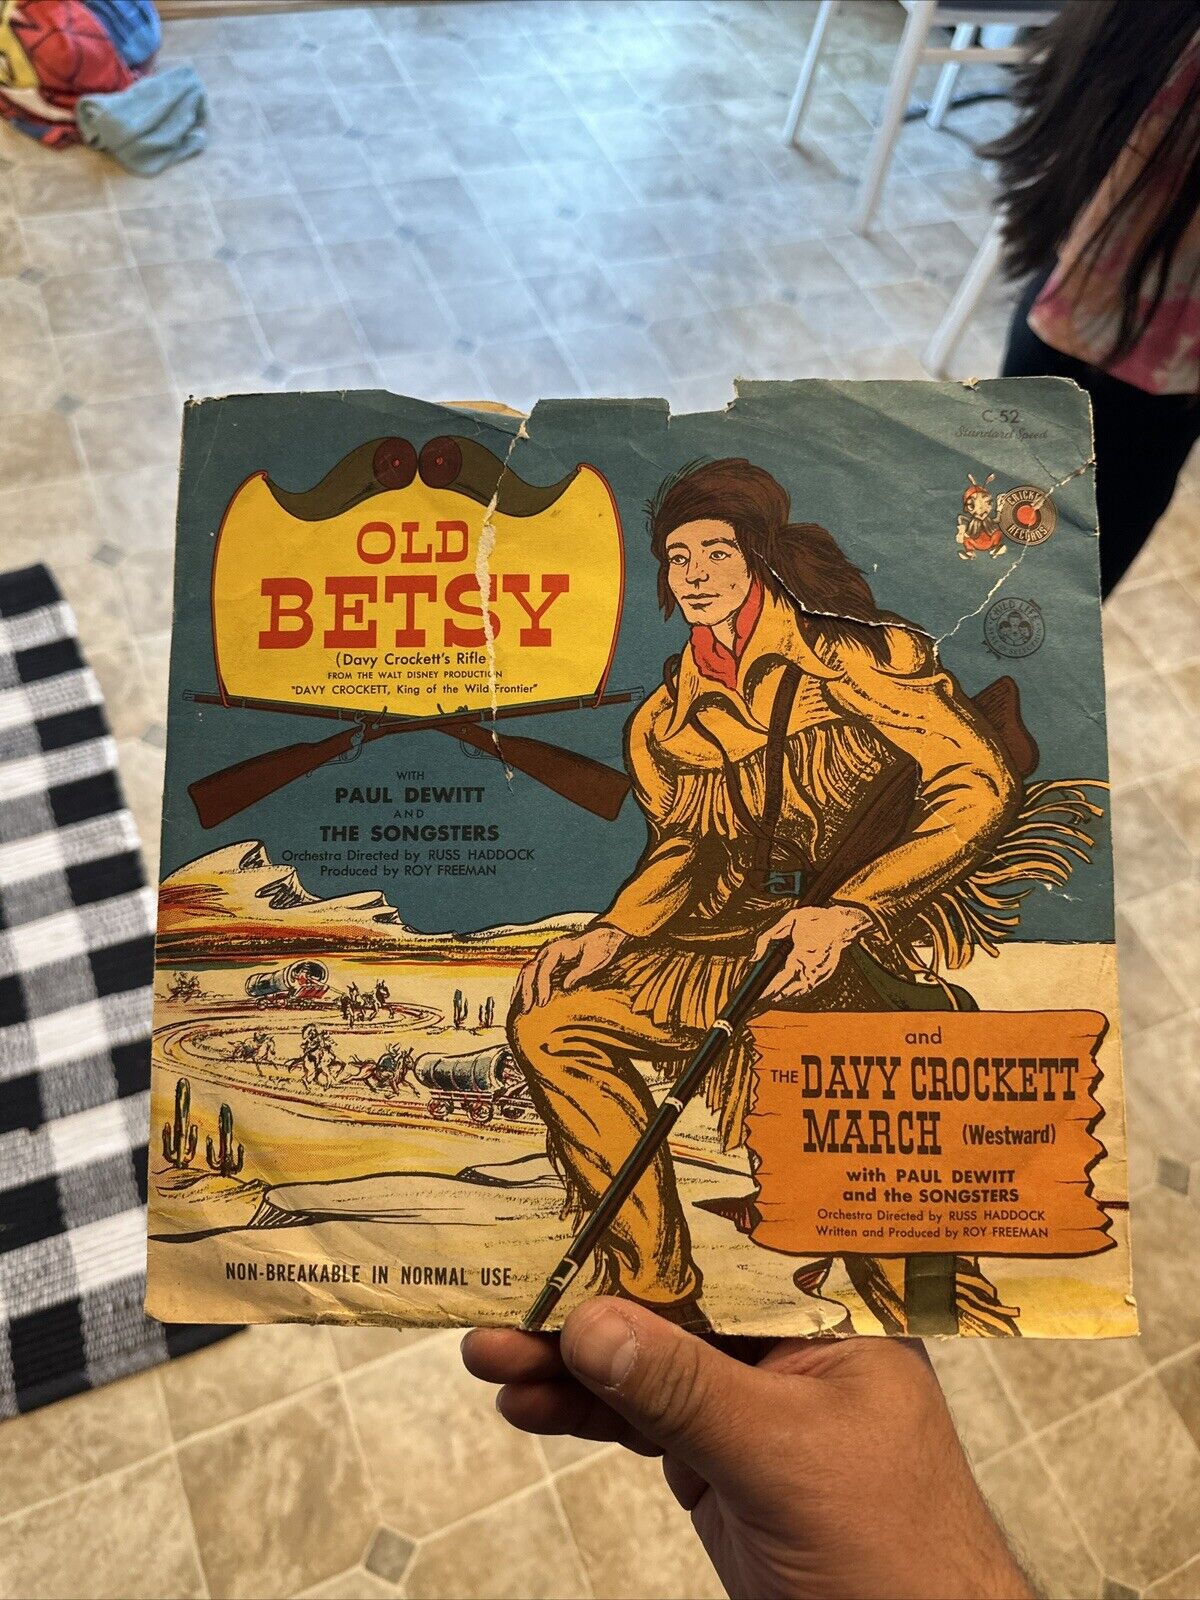 1953 Old Betsy Davy Crockett's Rifle Peter Pan Records Vintage Phono Record 78